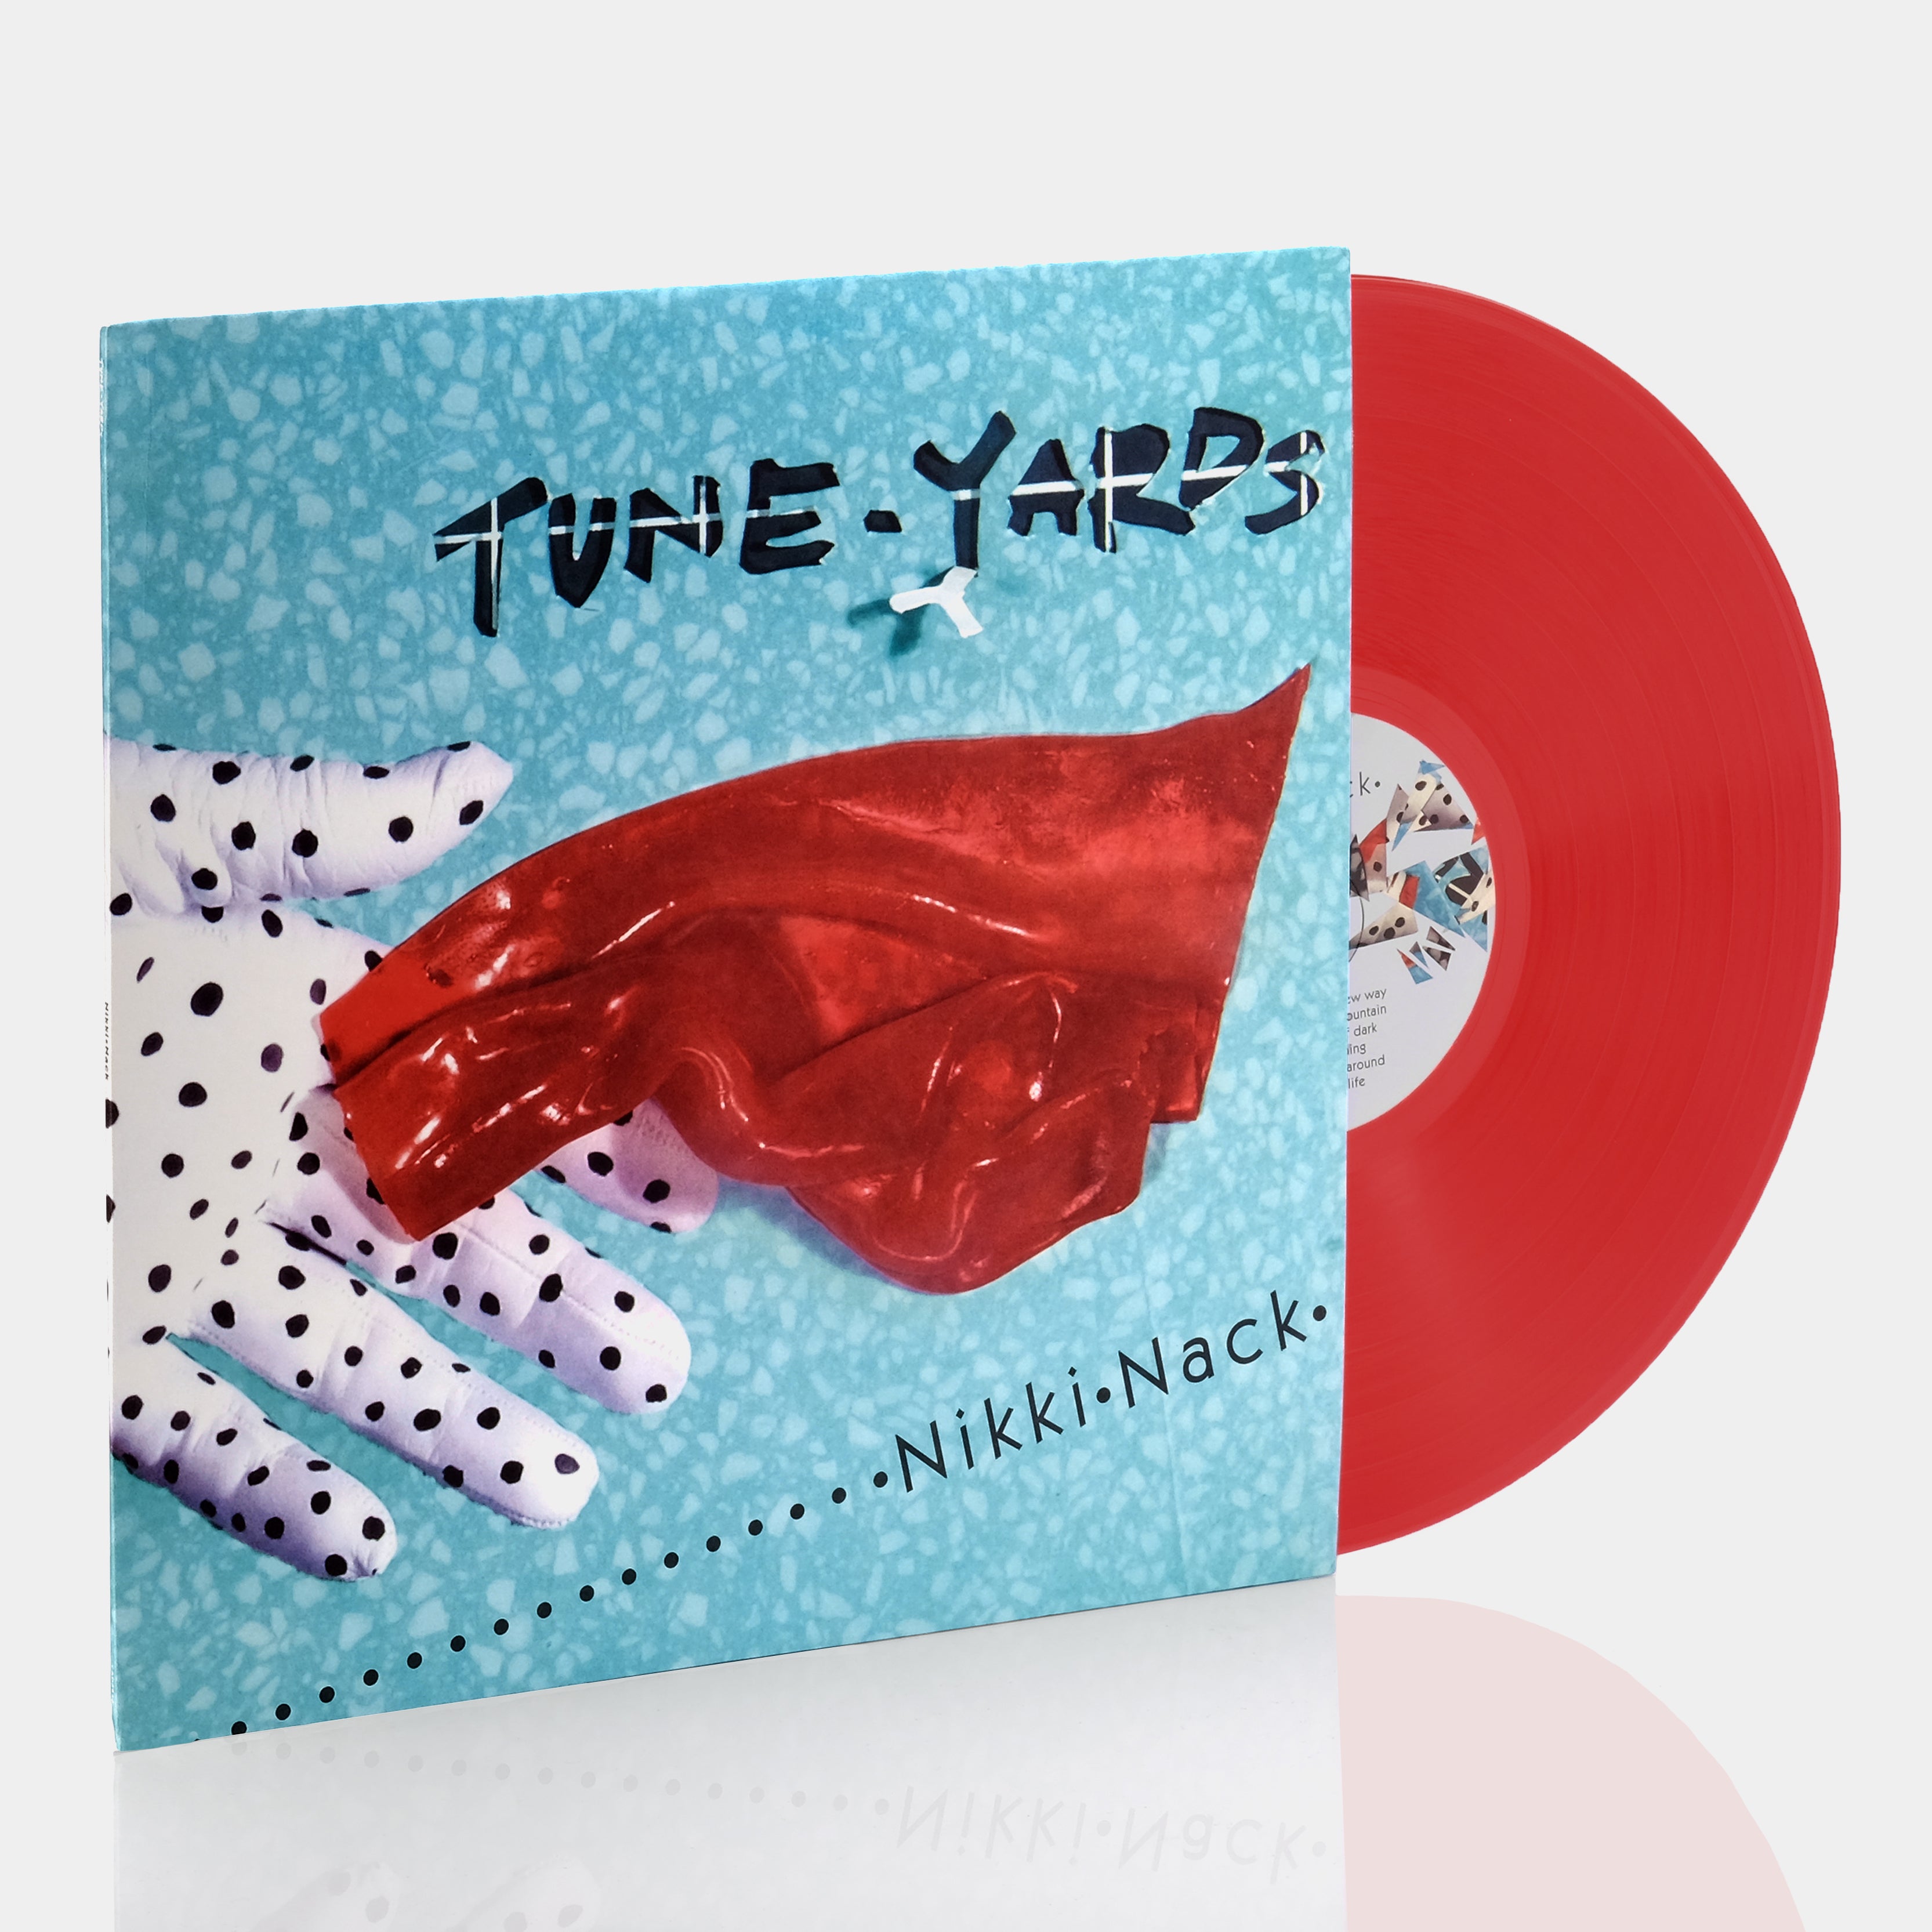 Tune-Yards - Nikki Nack LP Red Vinyl Record